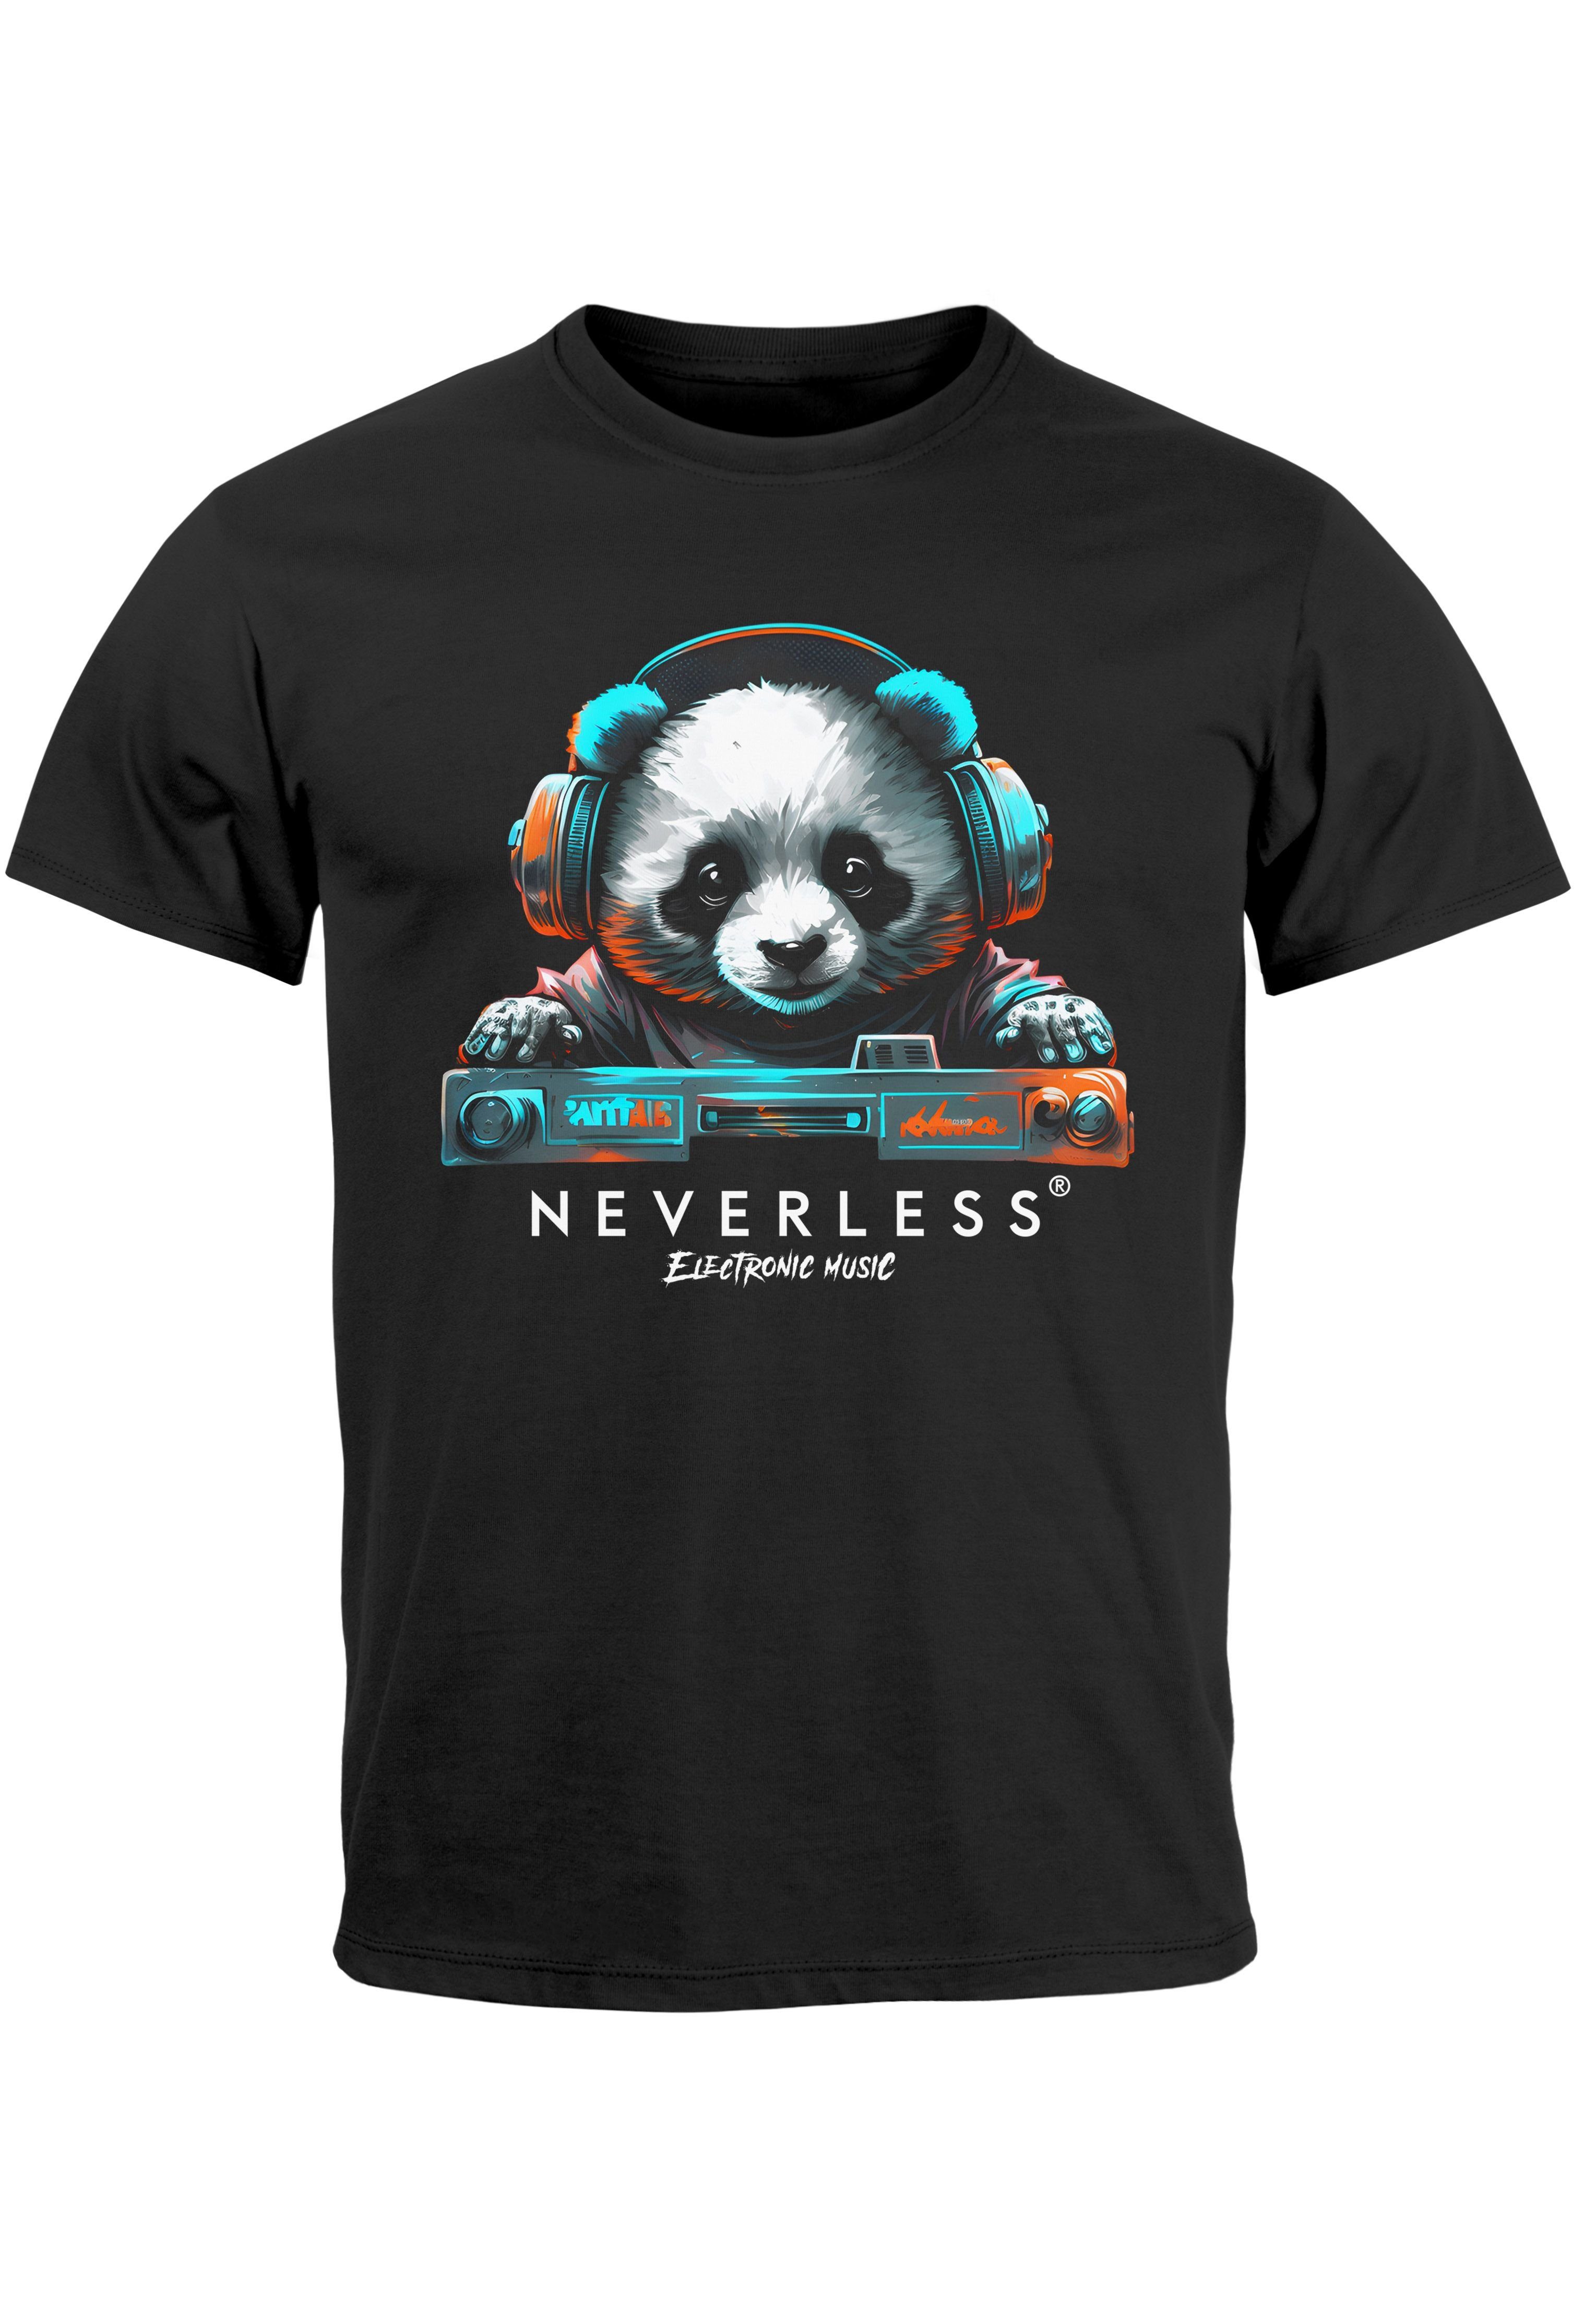 Neverless Print-Shirt Herren T-Shirt Panda Bär Aufdruck Tiermotiv Musik Techo Print Fashion mit Print schwarz